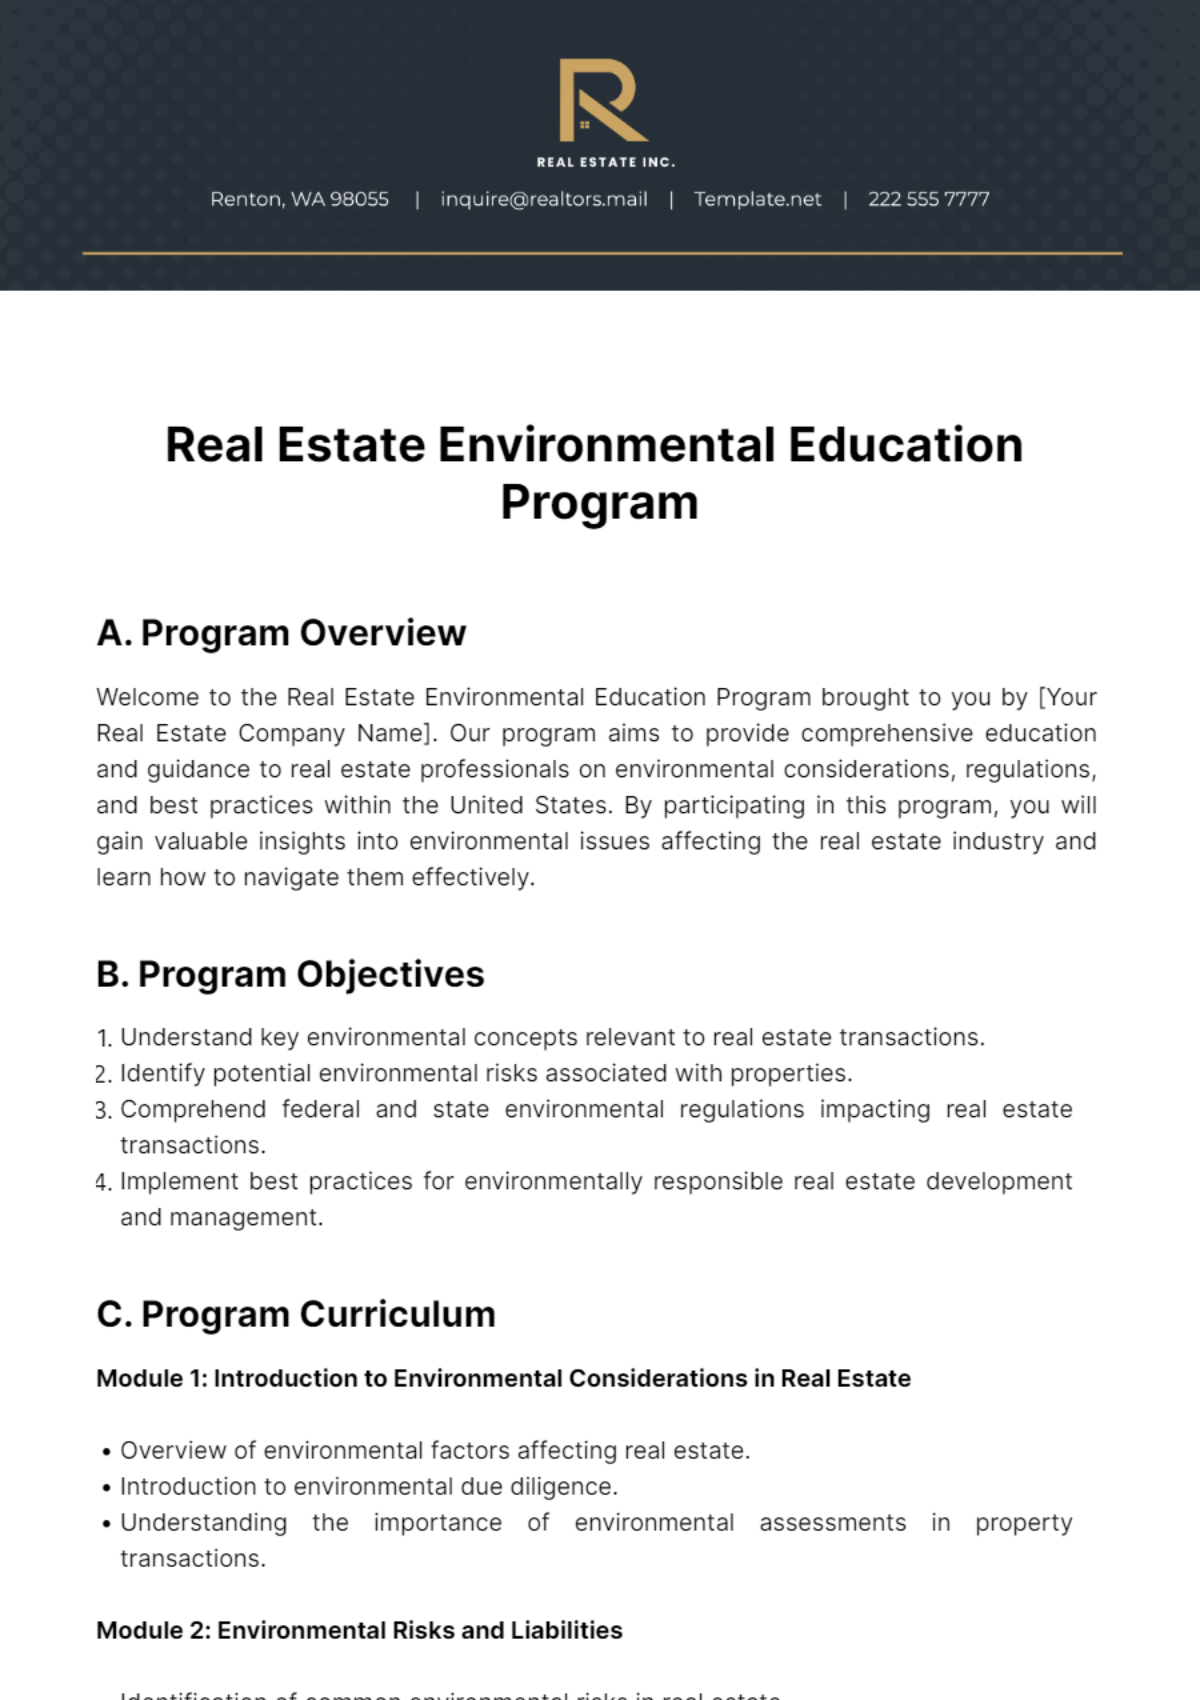 Real Estate Environmental Education Program Template